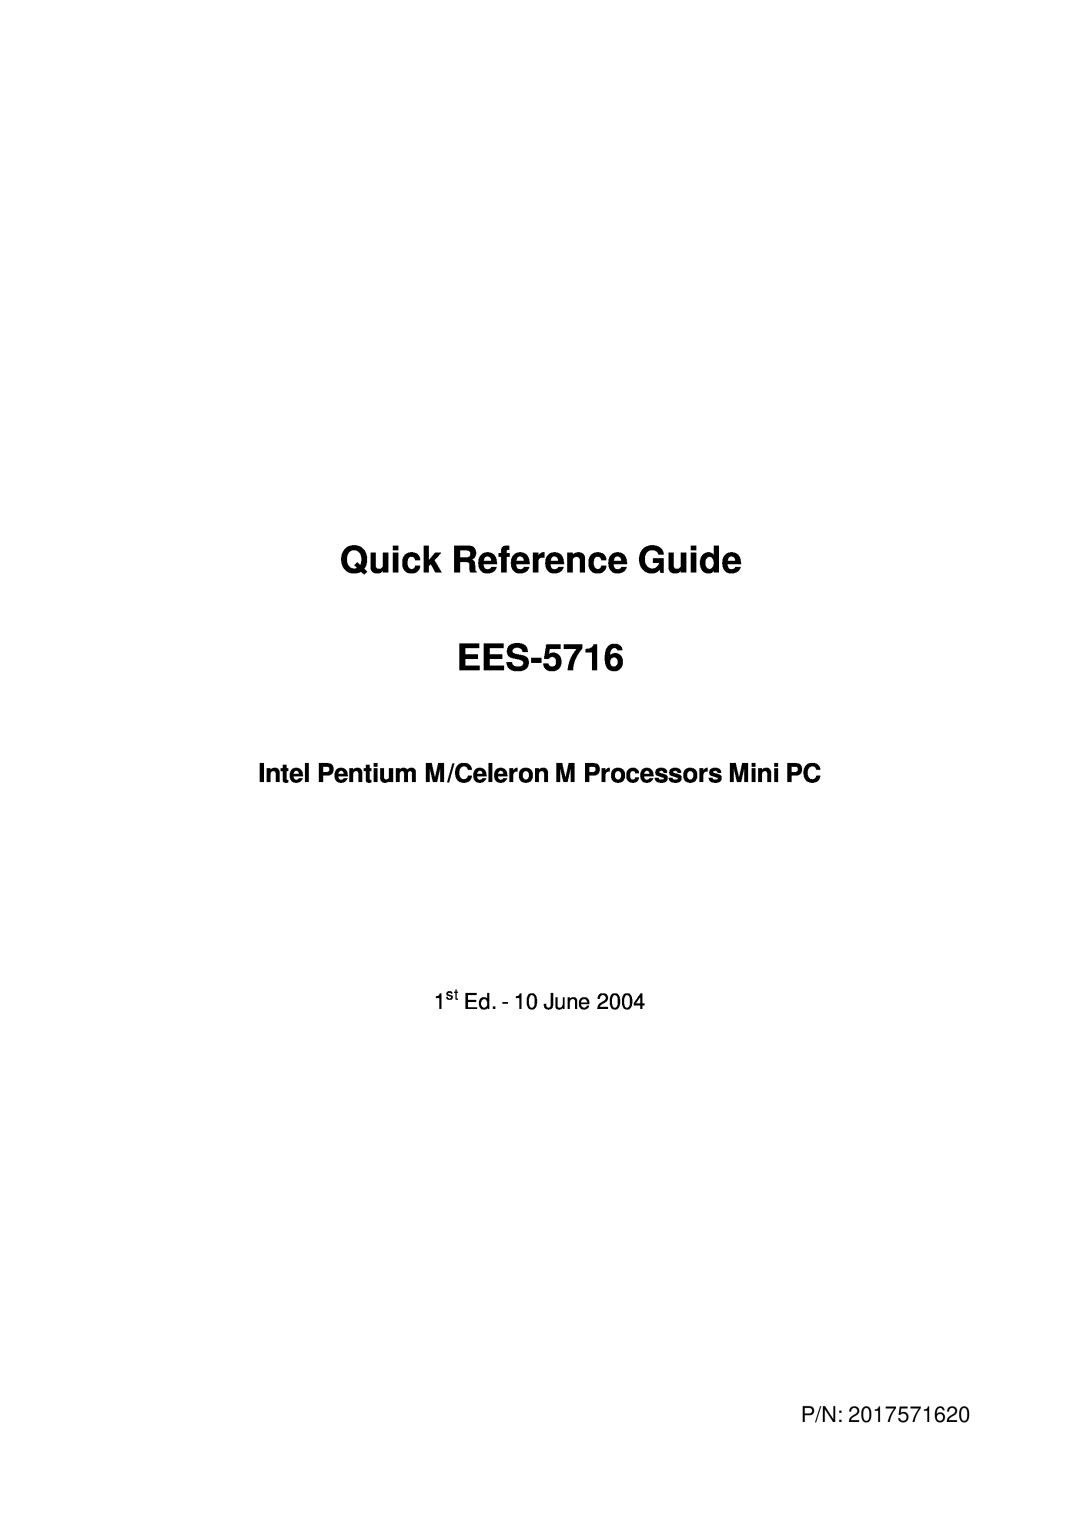 Intel Intel Pentium M/Celeron M Processors Mini PC manual Quick Reference Guide EES-5716 